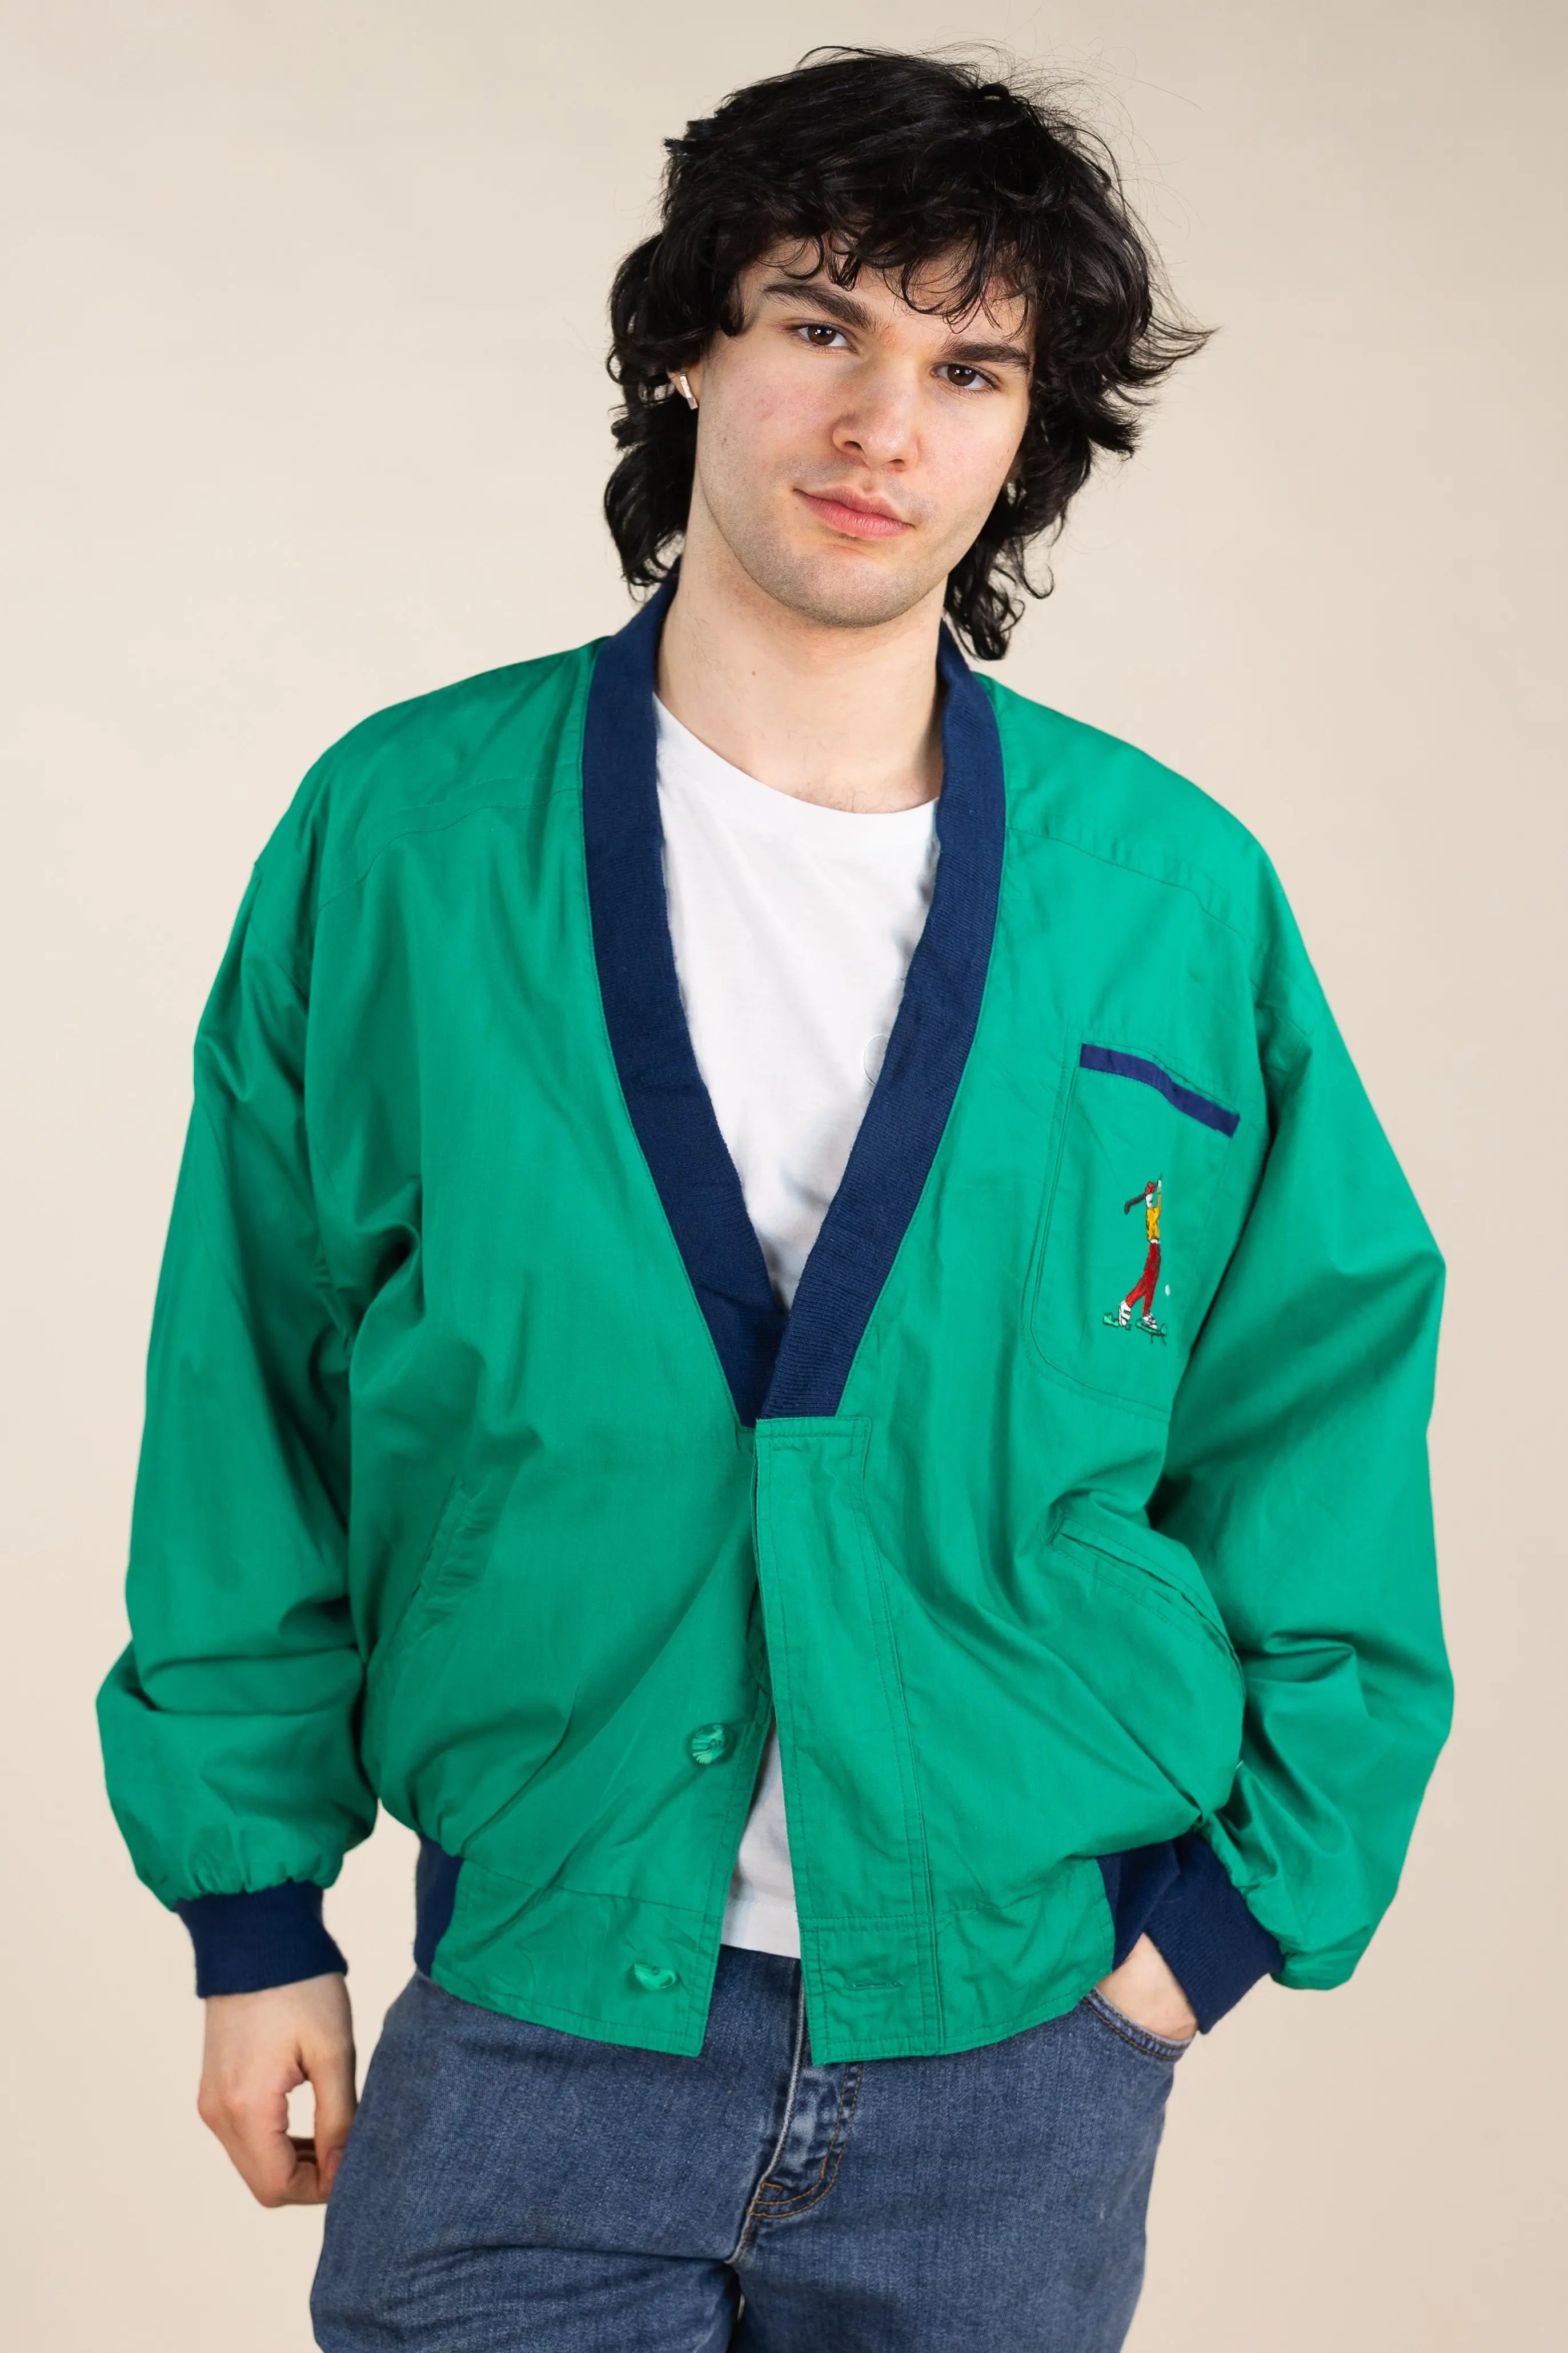 Alexander - Green Bomber Jacket- ThriftTale.com - Vintage and second handclothing